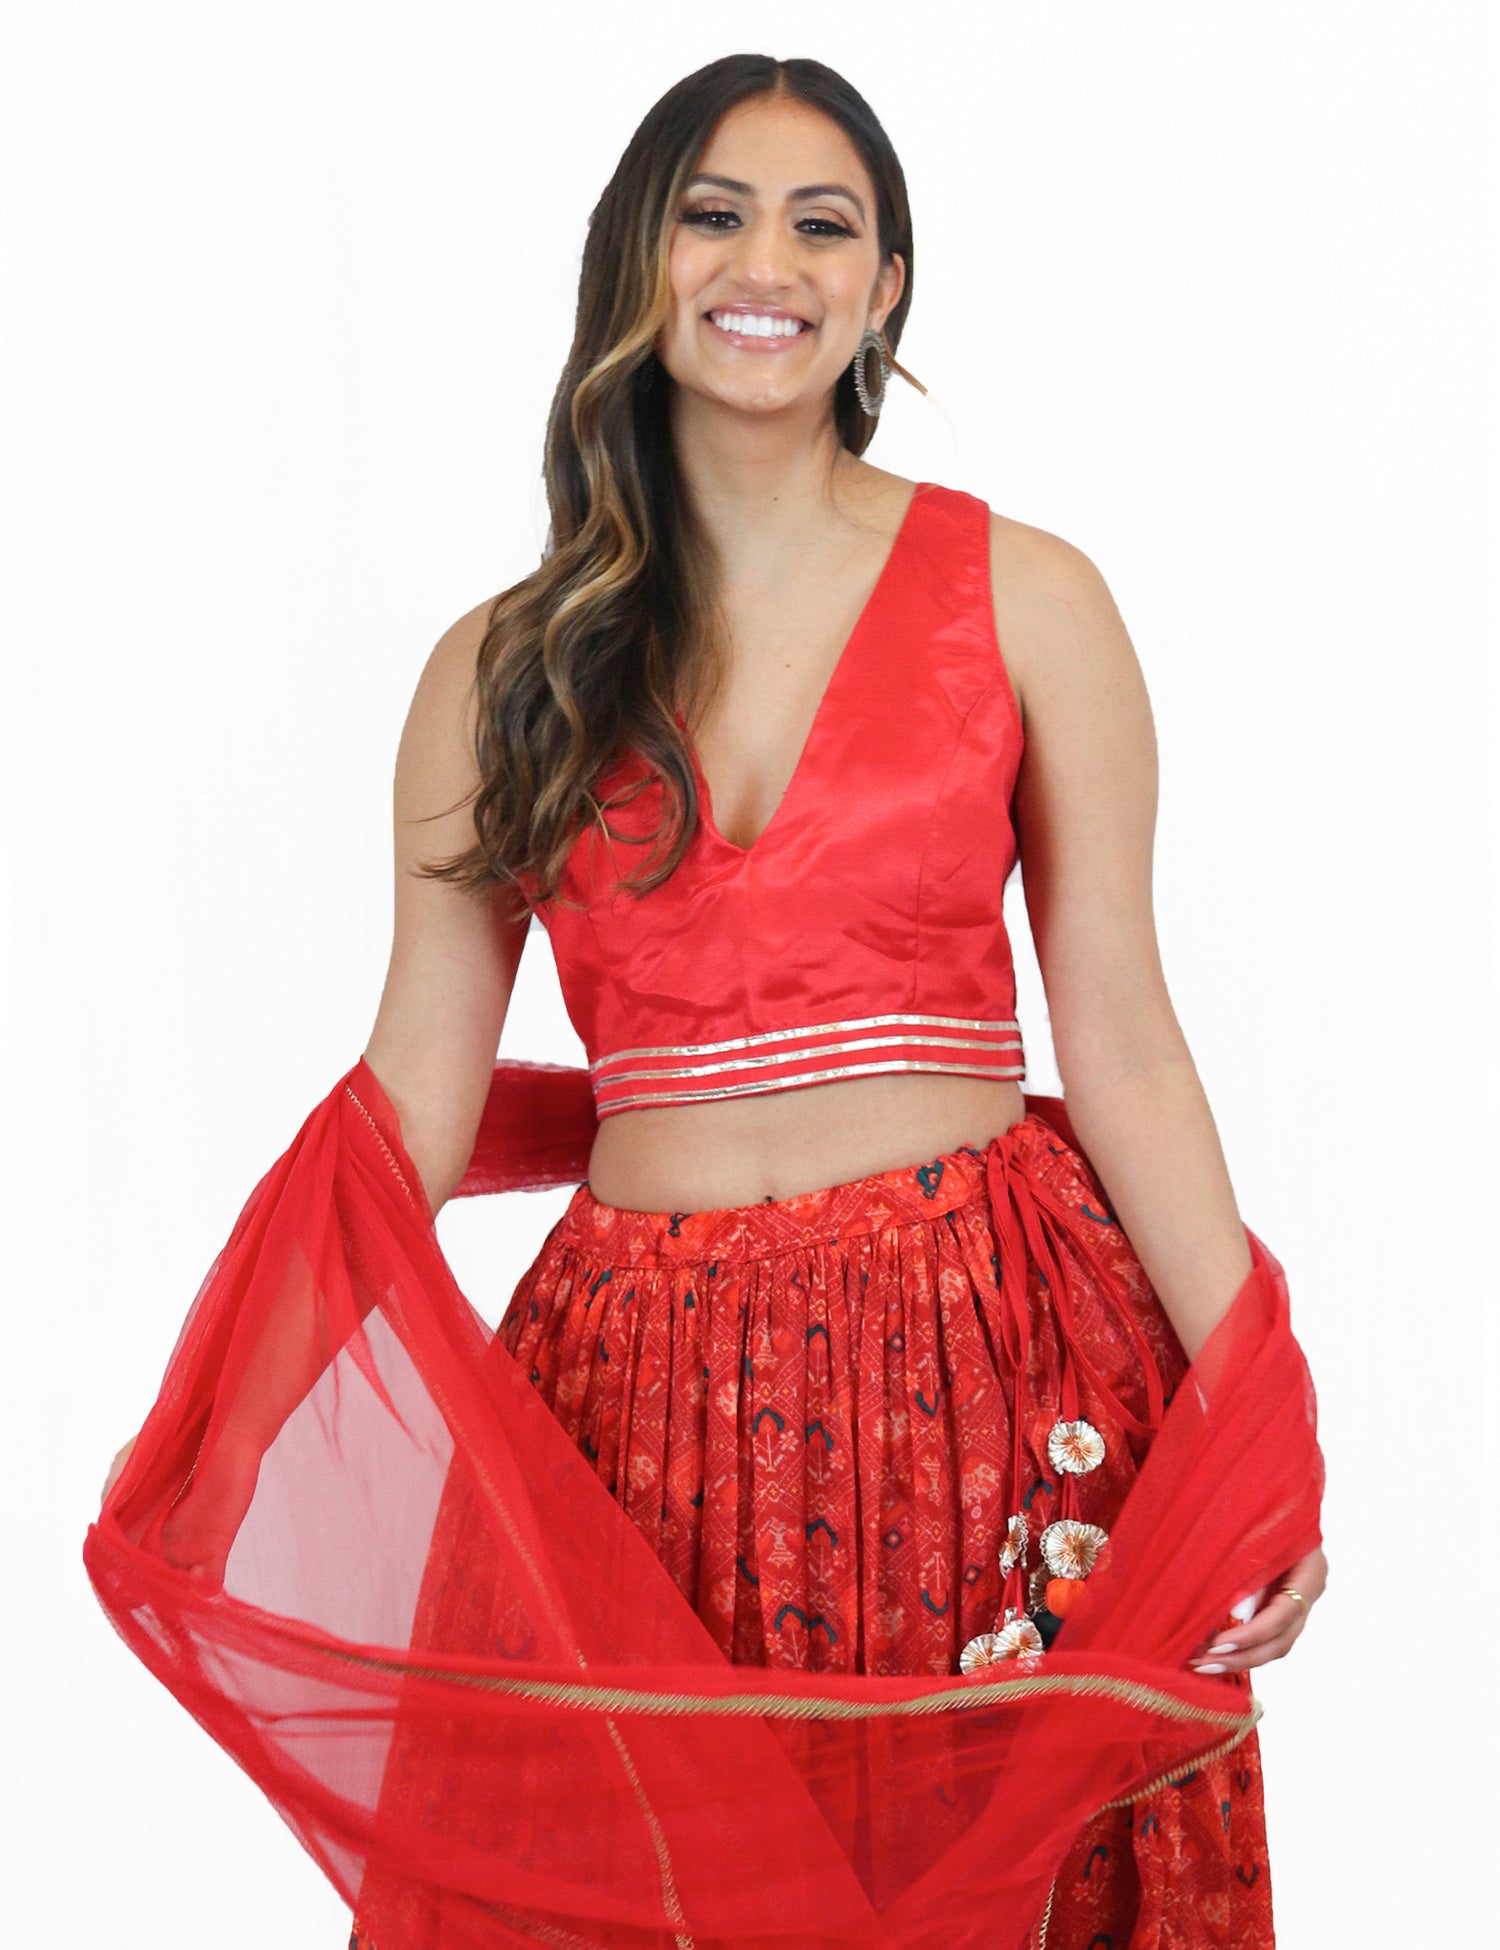 Rent Red Printed Lehenga Skirt with Matching Blouse & Dupatta